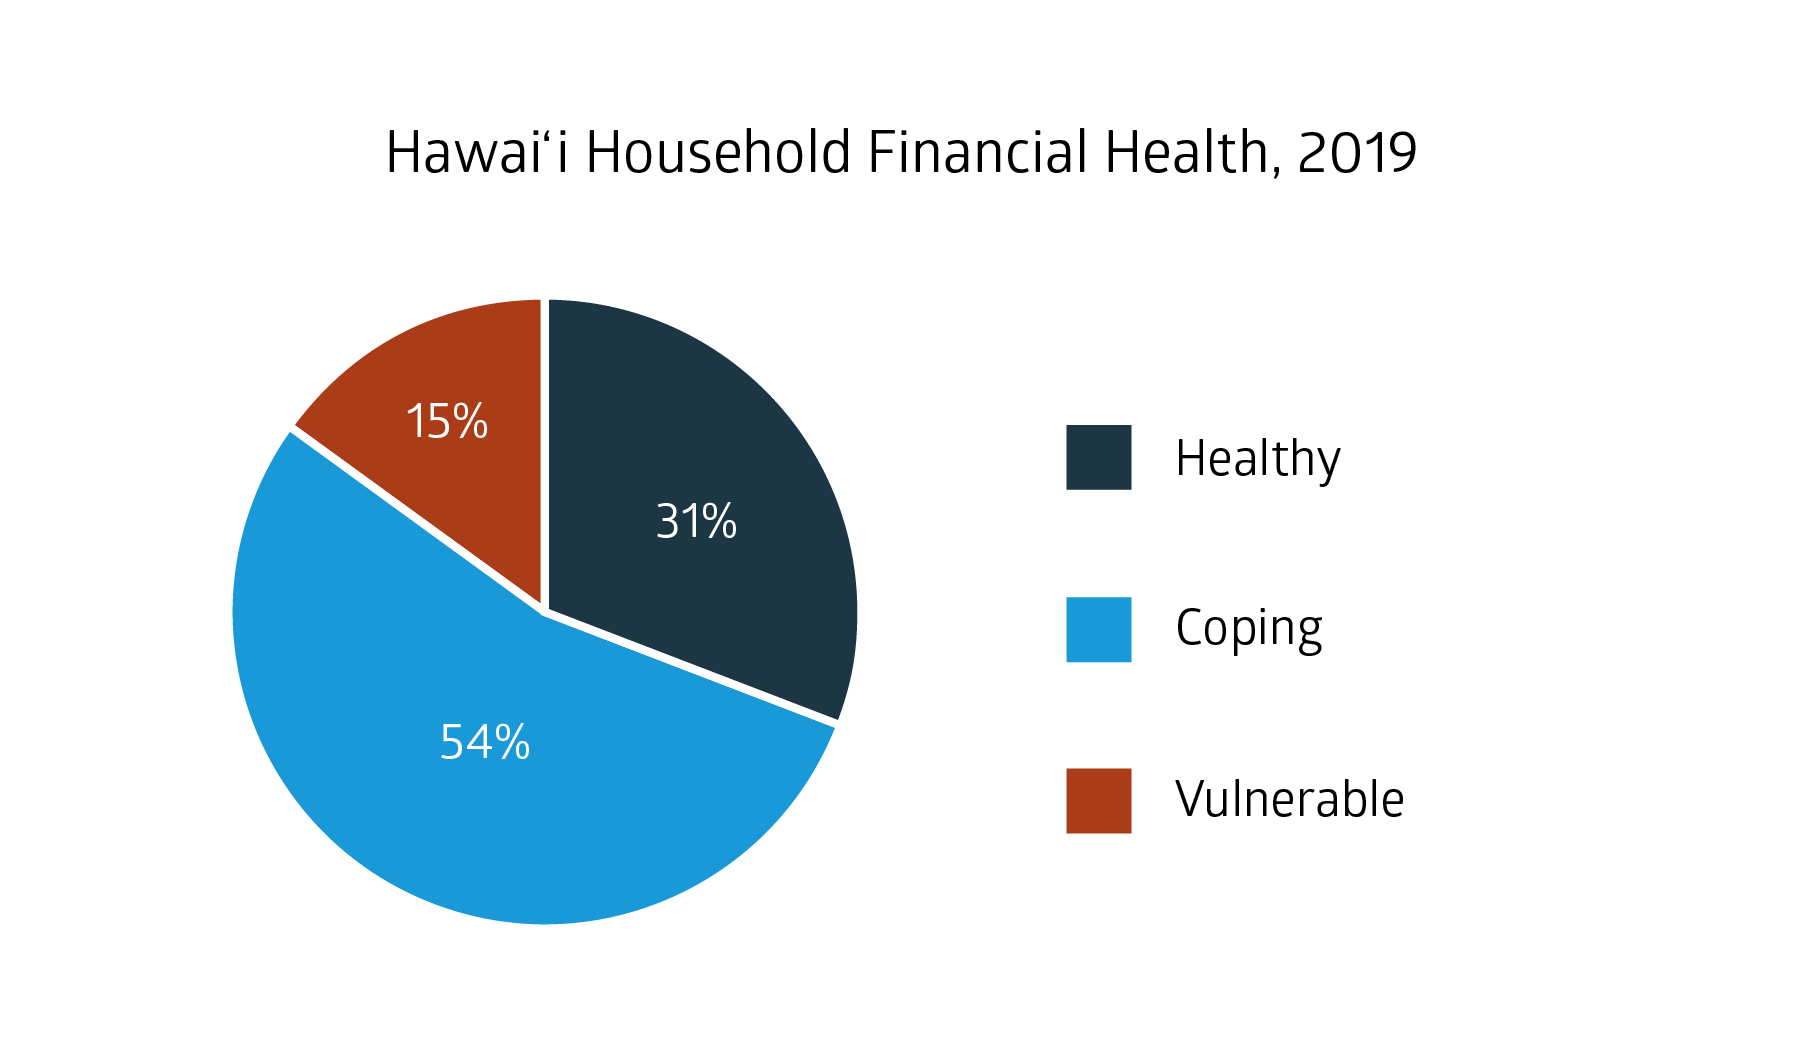 https://images.squarespace-cdn.com/content/v1/5ef66d594879125d04f91774/1595989309482-W1OP1PHUR1IOB471PBB1/WW_Hawaii-Household-Financial-Health-2019-01.png